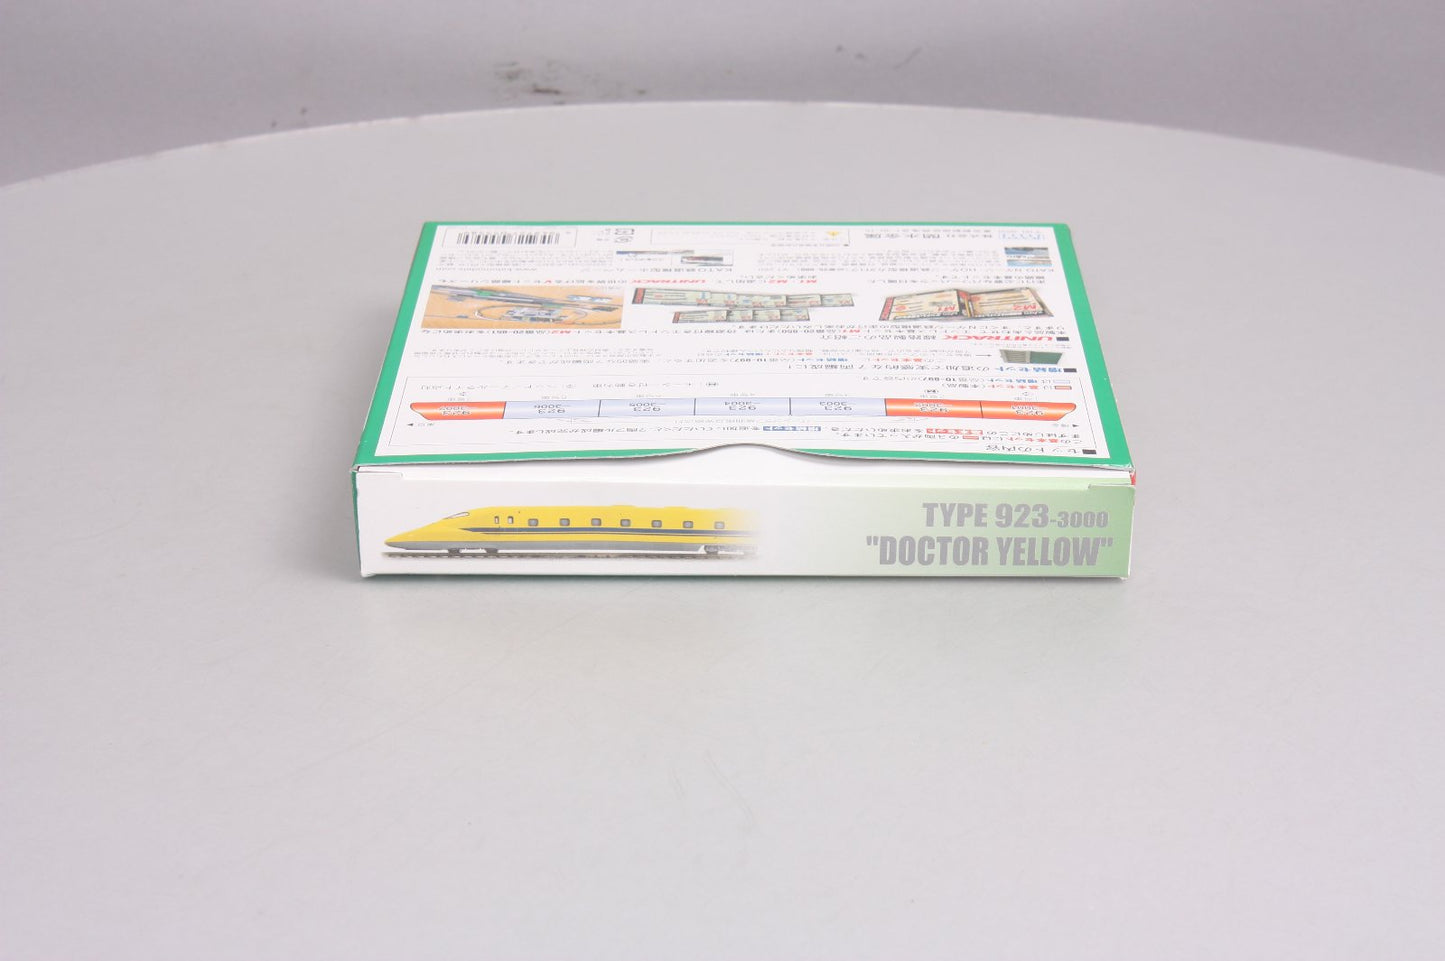 Kato 10-896 N Gauge JR Shinkansen "Doctor Yellow"  Electric Passenger Train Set LN/Box